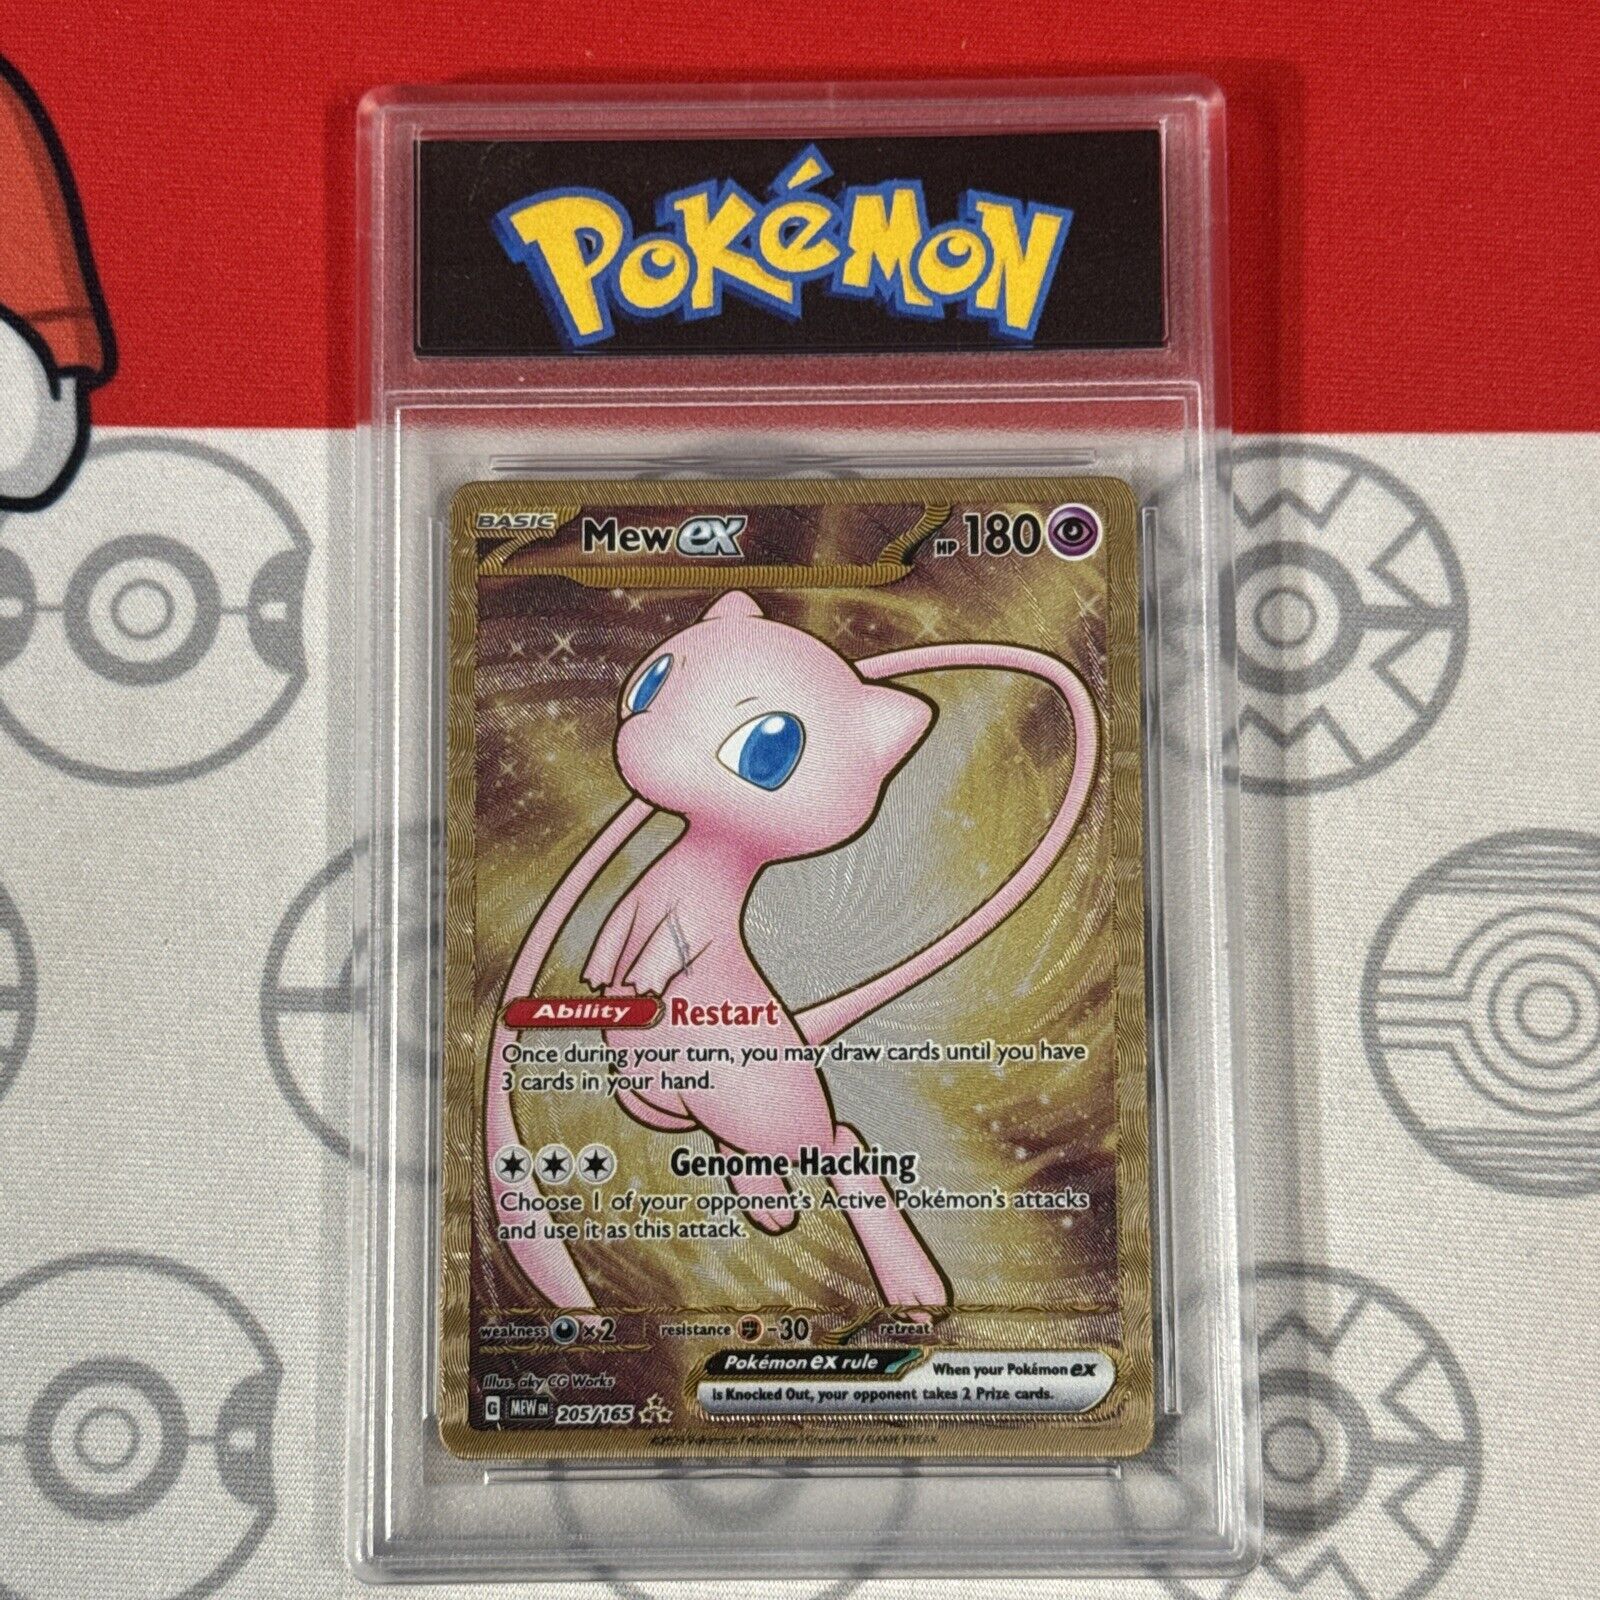 🏆 Collectors Grade 10 Pokemon 151 Mew EX #205/165 Gold Metal Ultra Graded Card